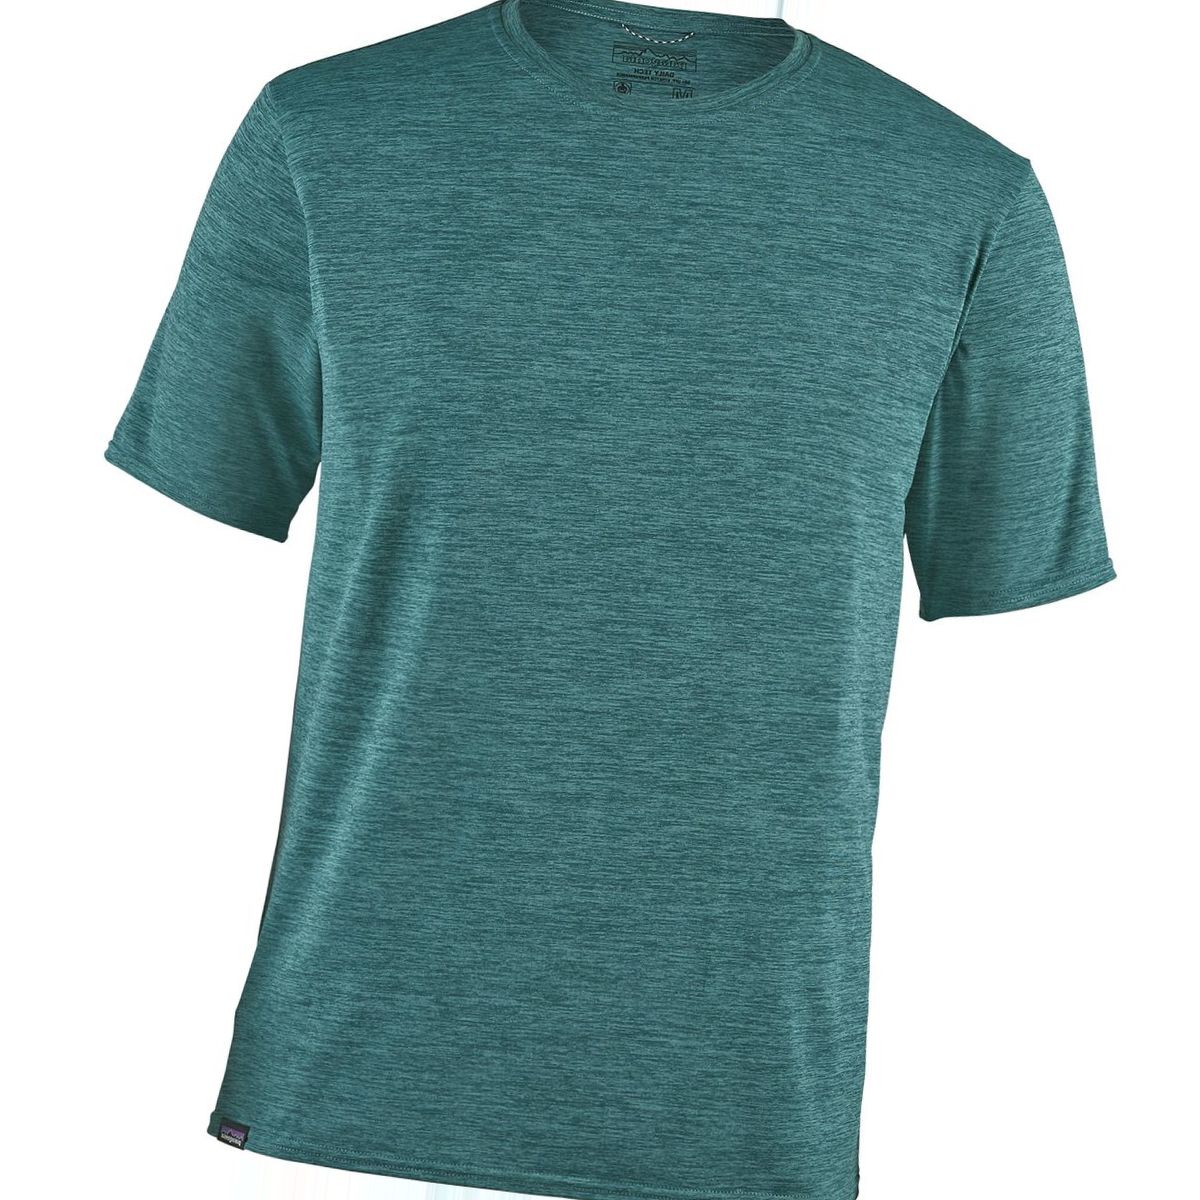 Patagonia Capilene Cool Daily Short-Sleeve Shirt - Men's